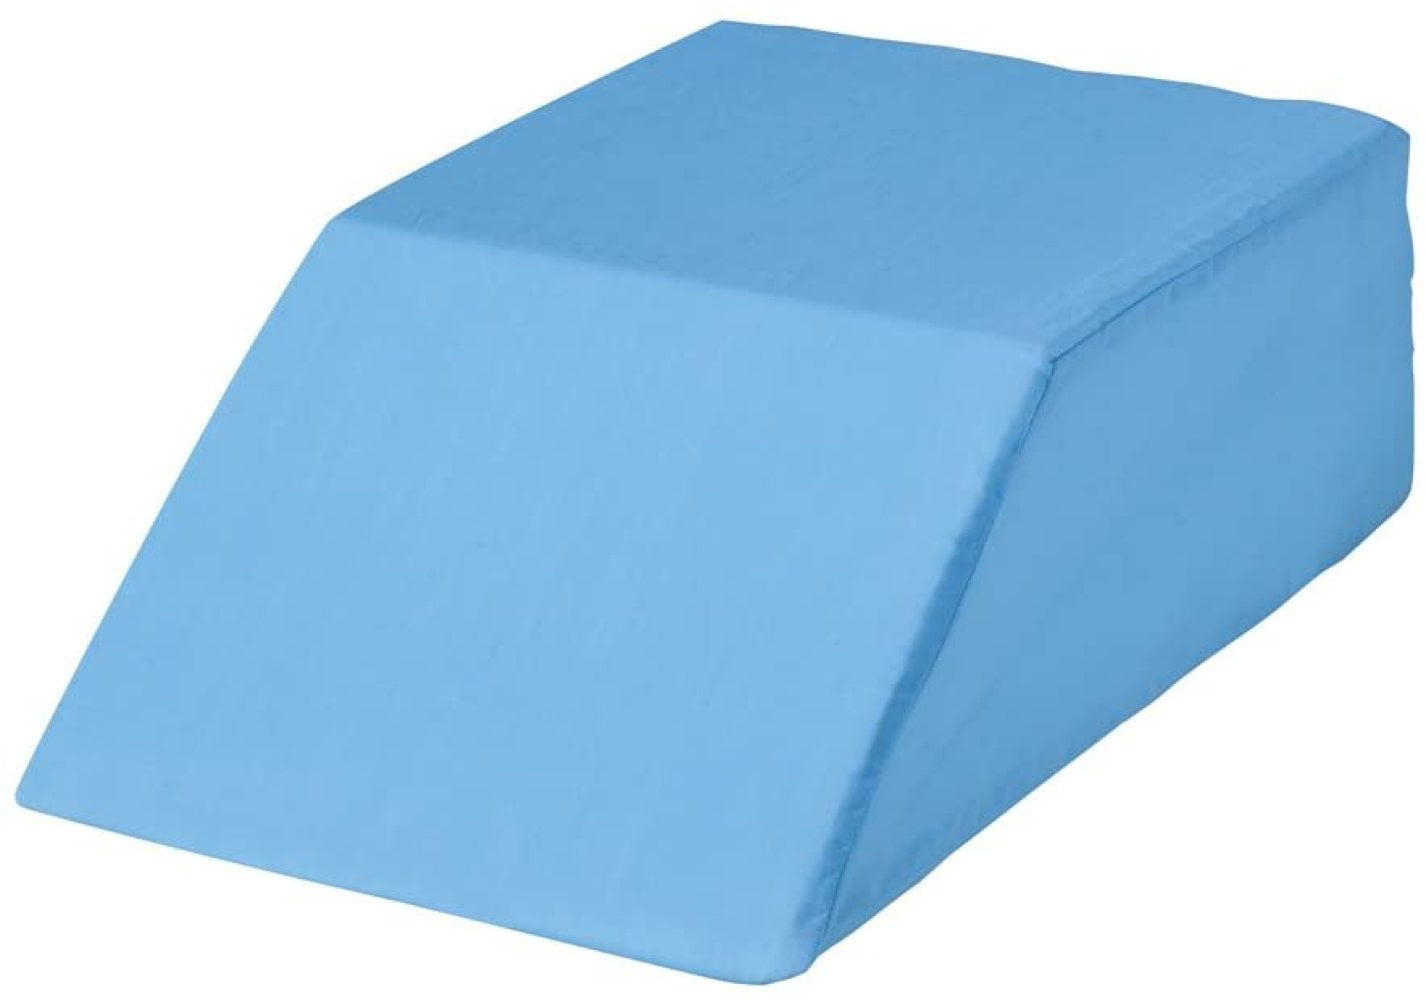 Ortho Bed Wedge Foam Leg Rest Cushion Pillow Elevating Legs DMI 6x20x24 